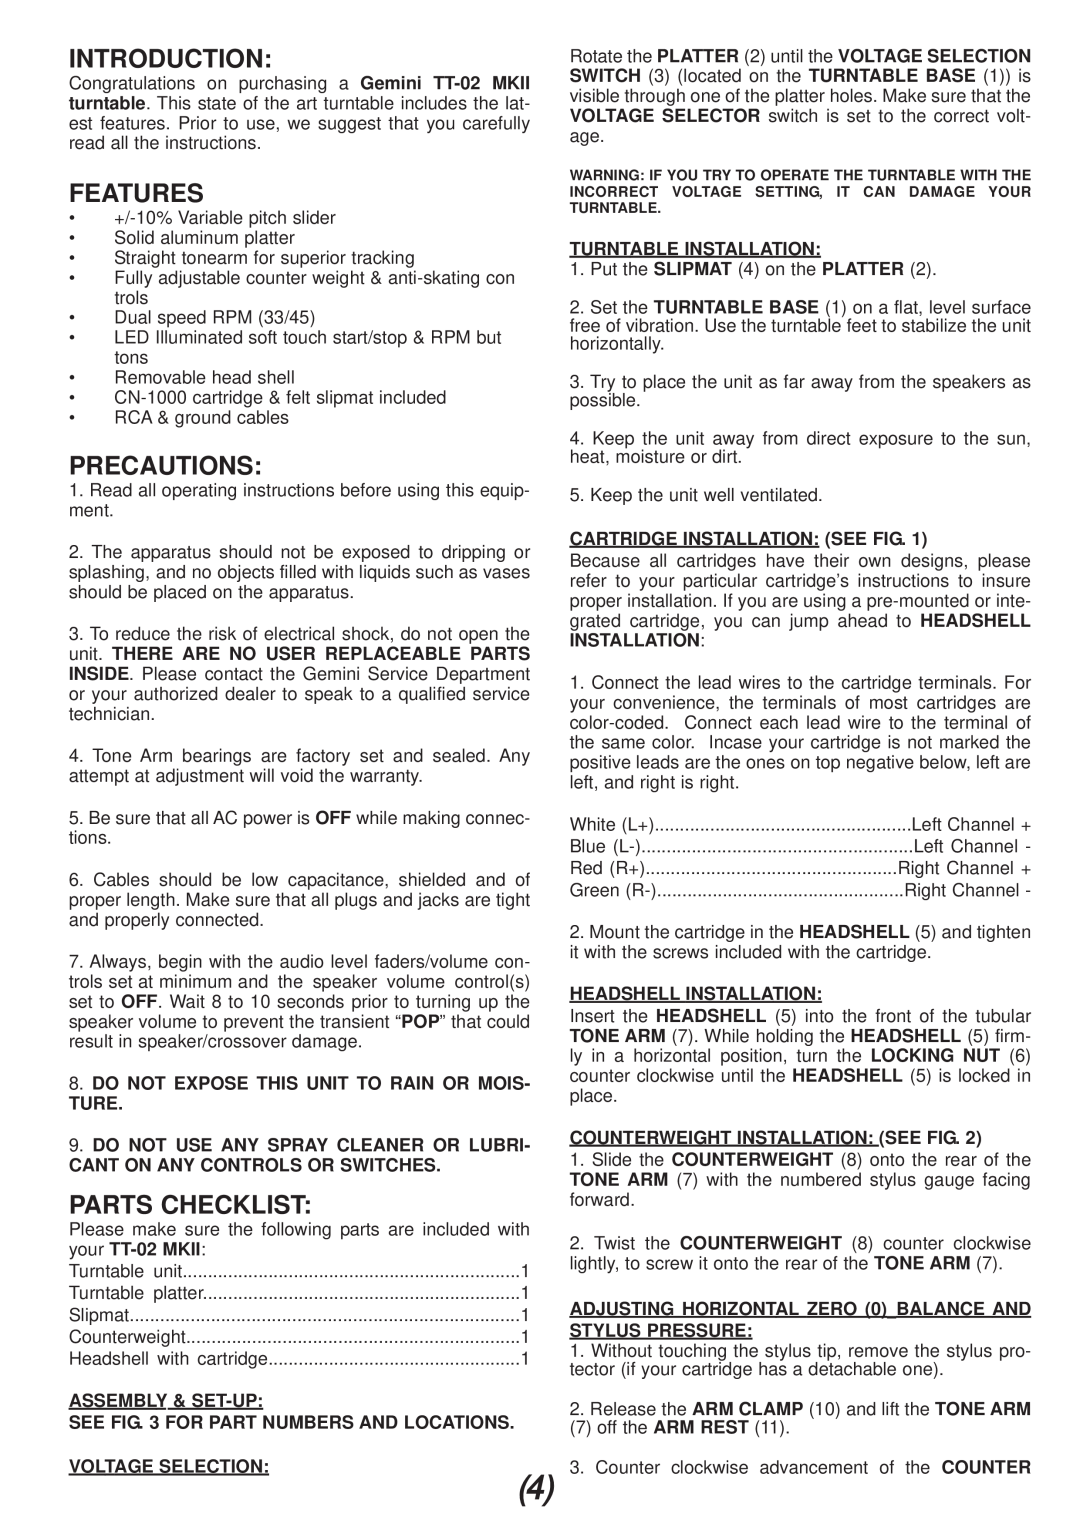 Gemini Industries TT-002MKII manual Introduction, Features, Precautions, Parts Checklist 